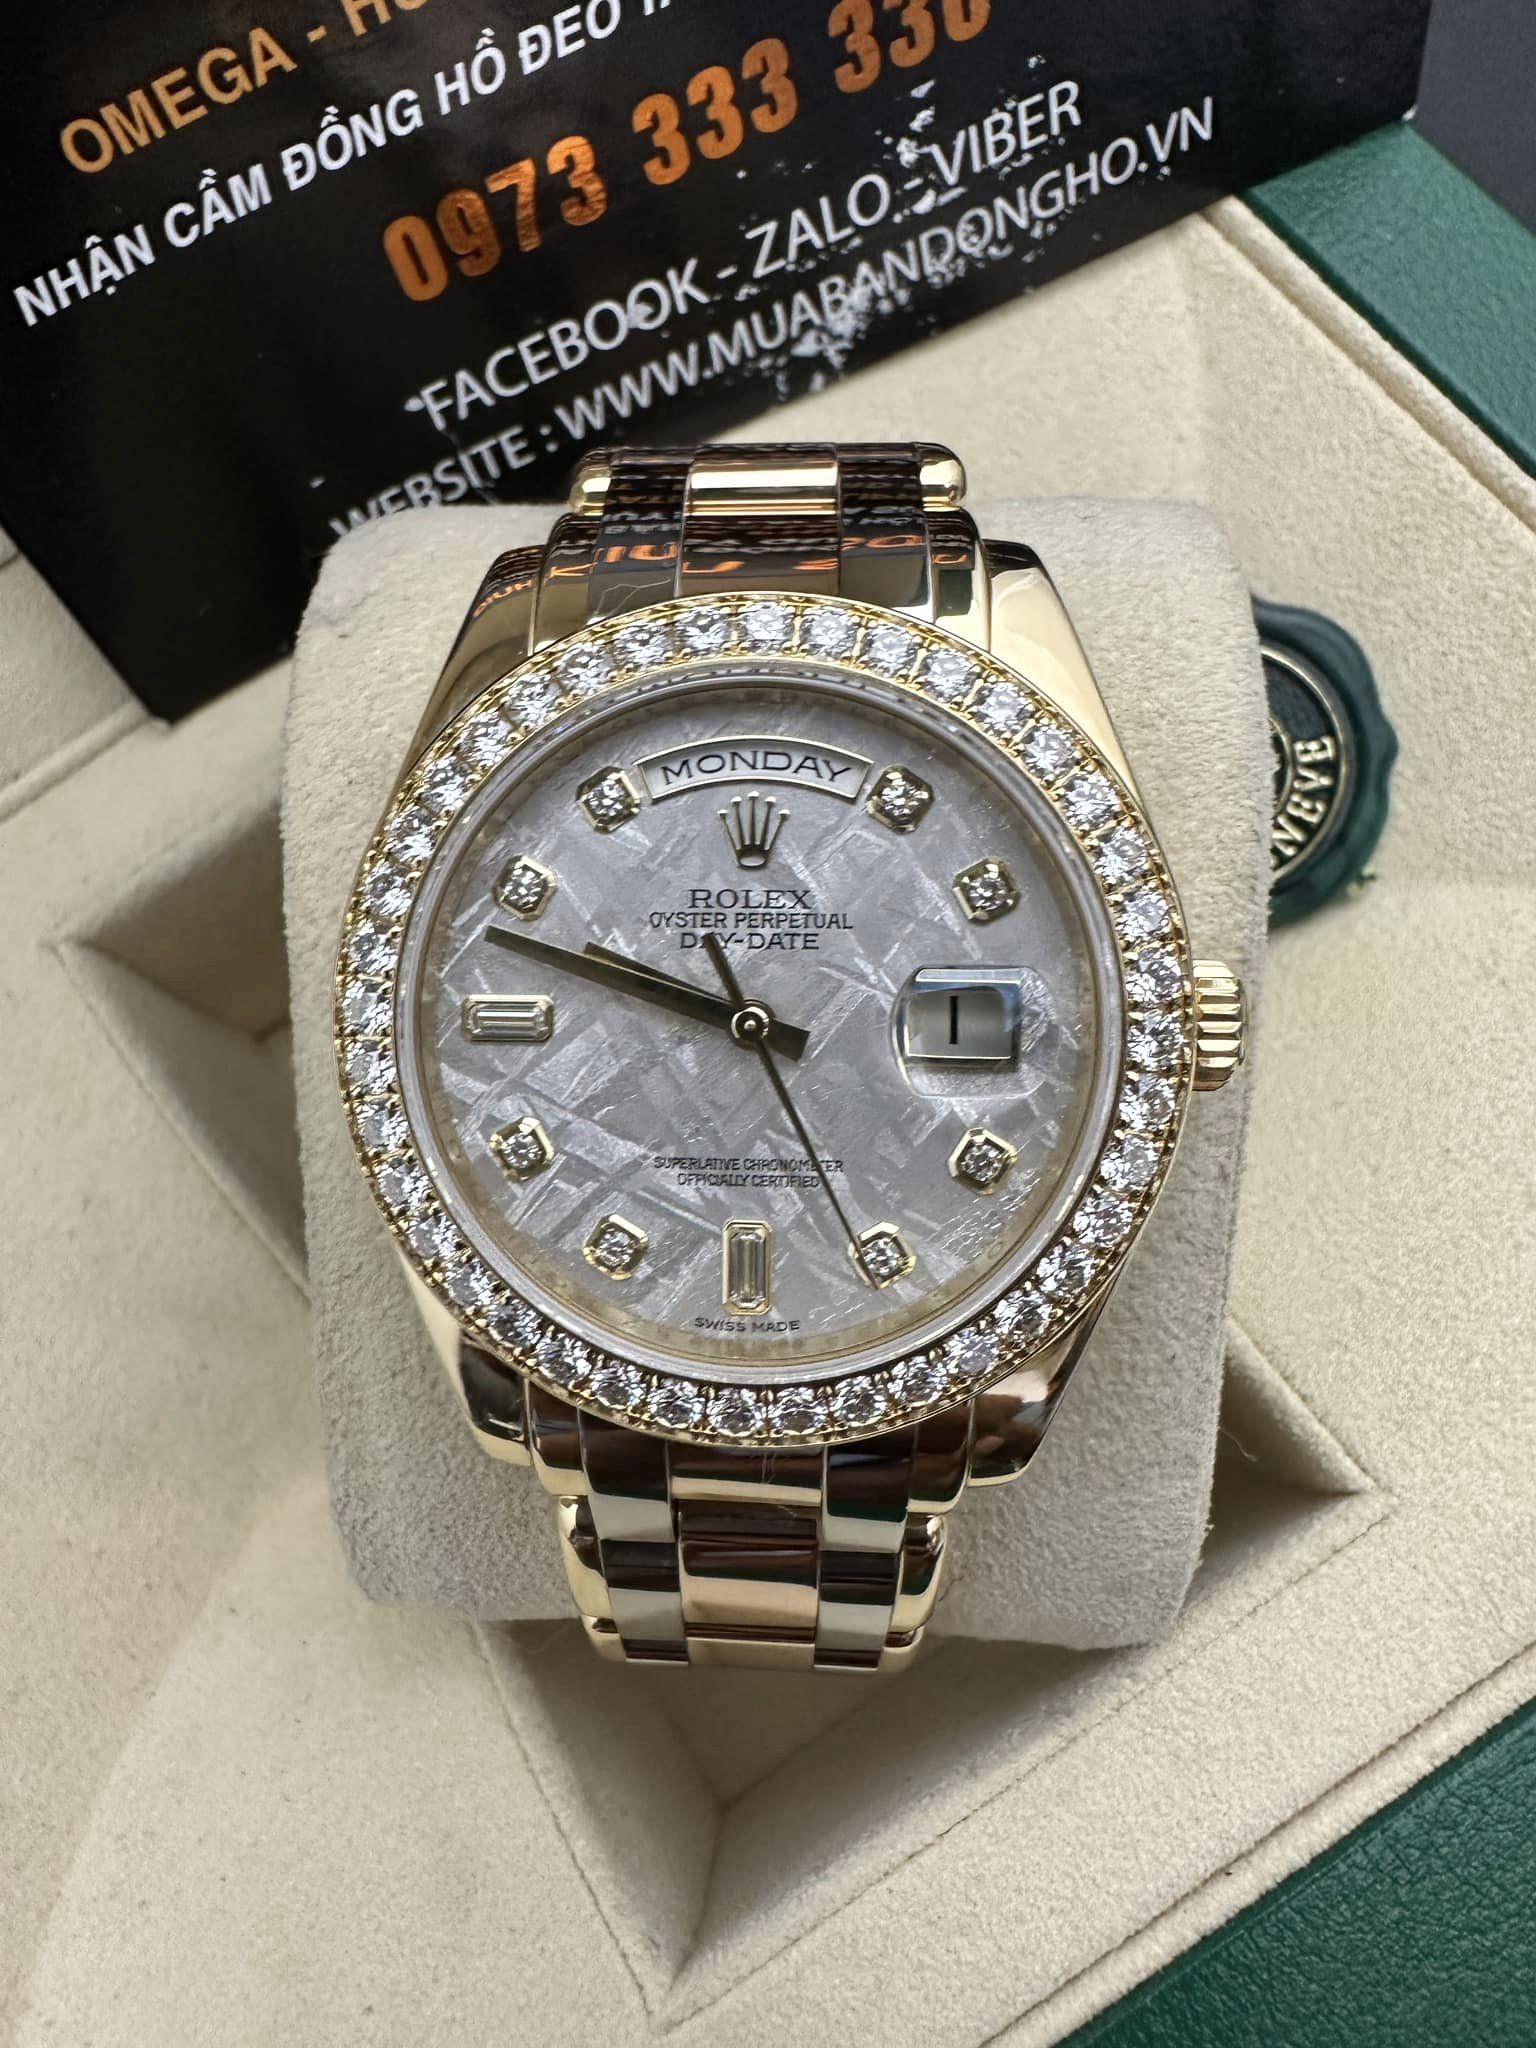 Cầm đồng hồ Rolex Tìm hiểu về dịch vụ cầm đồng hồ và thu mua đồng hồ cũ